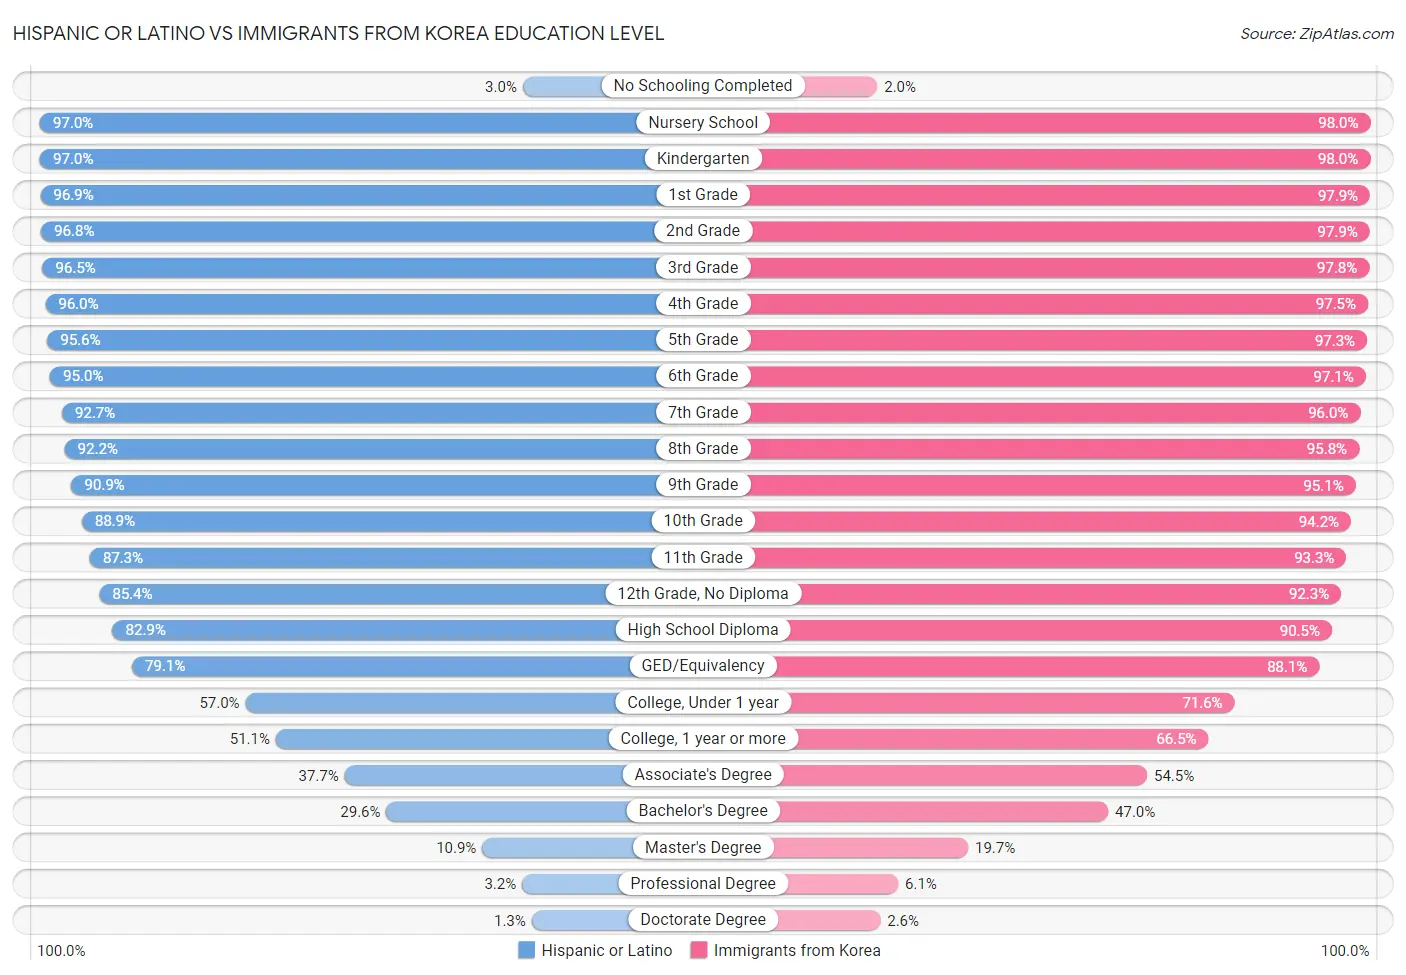 Hispanic or Latino vs Immigrants from Korea Education Level